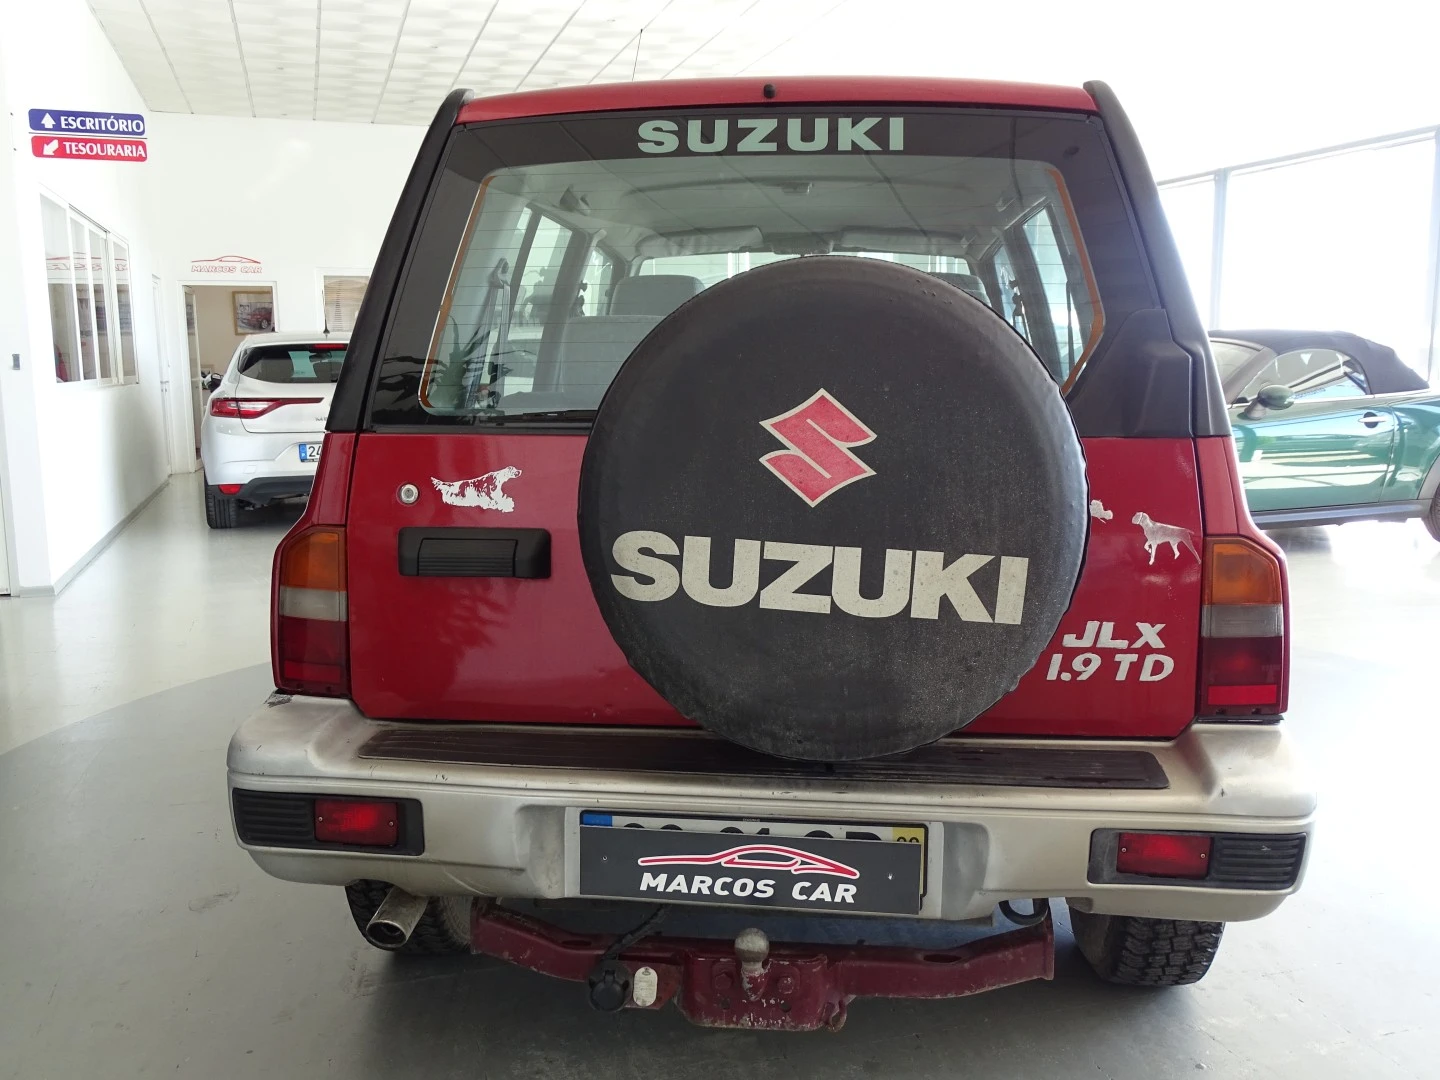 Suzuki Vitara 1.9 TD JLX